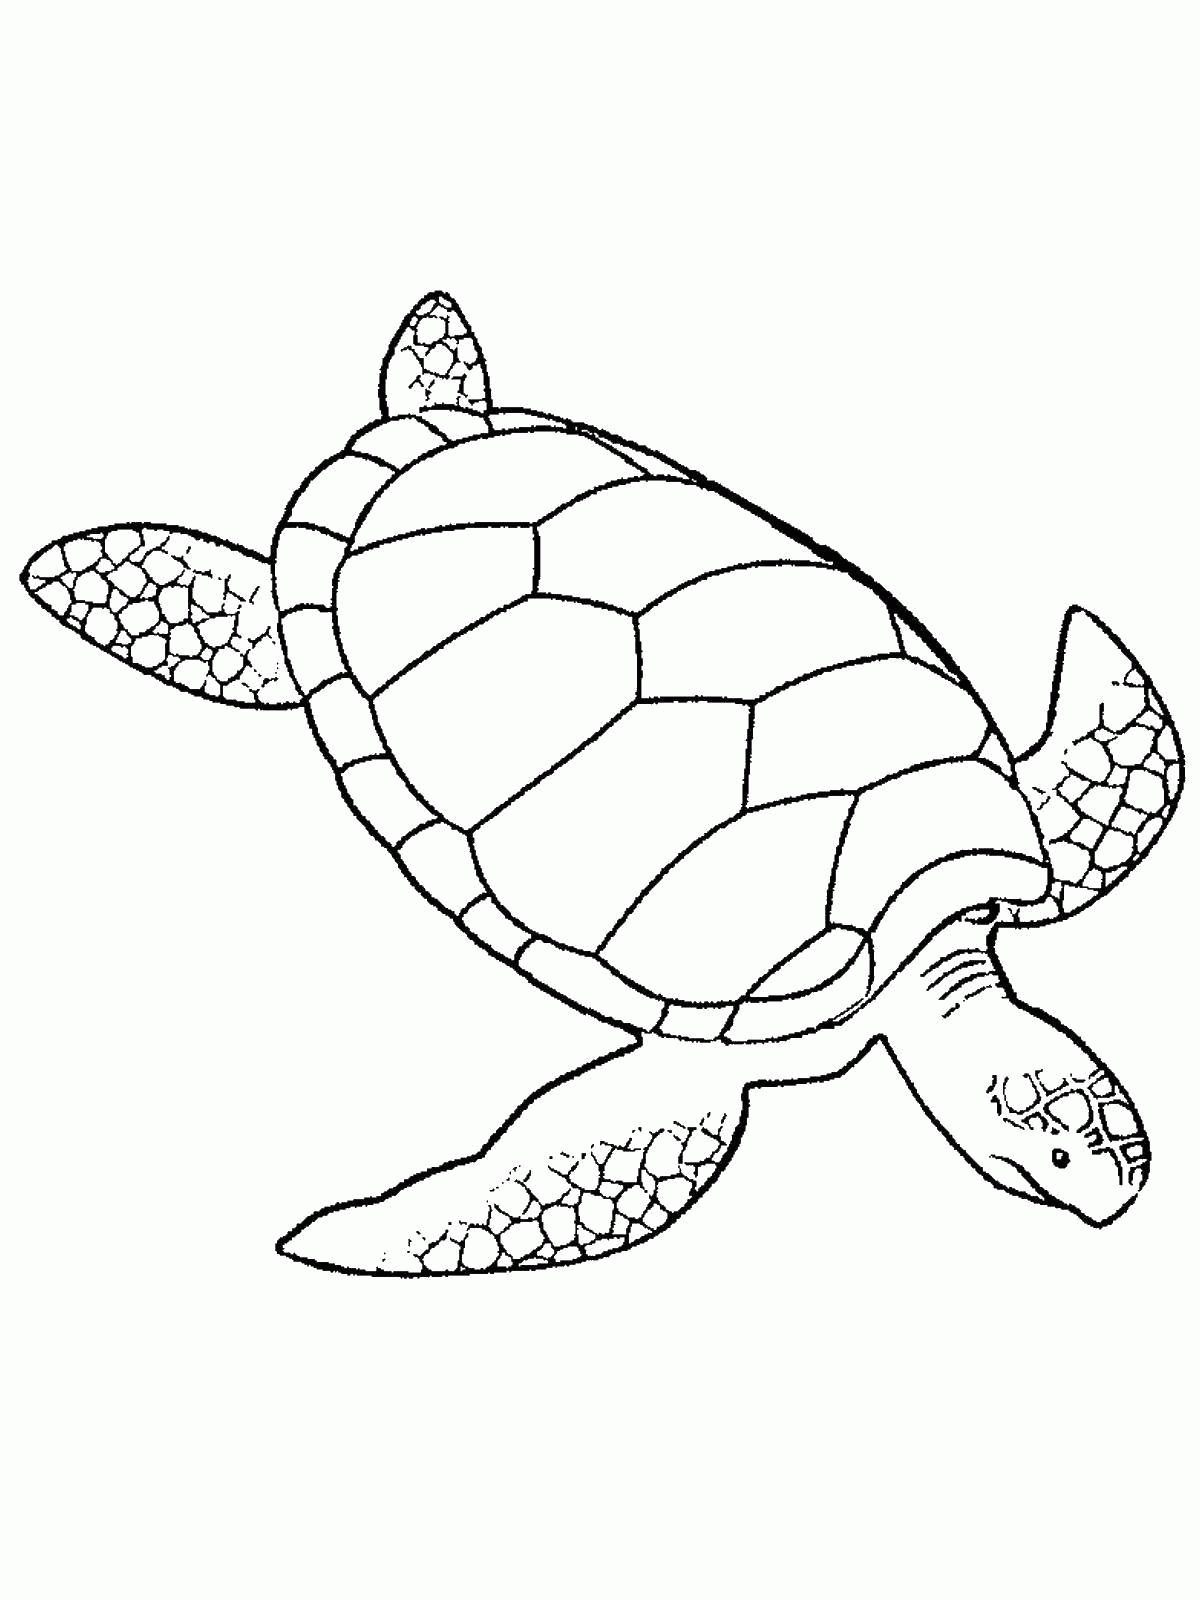 Название: Раскраска Название: Раскраска Подводная черепаха. Категория: морская черепаха. Теги: черепаха, панцирь.. Категория: . Теги: .